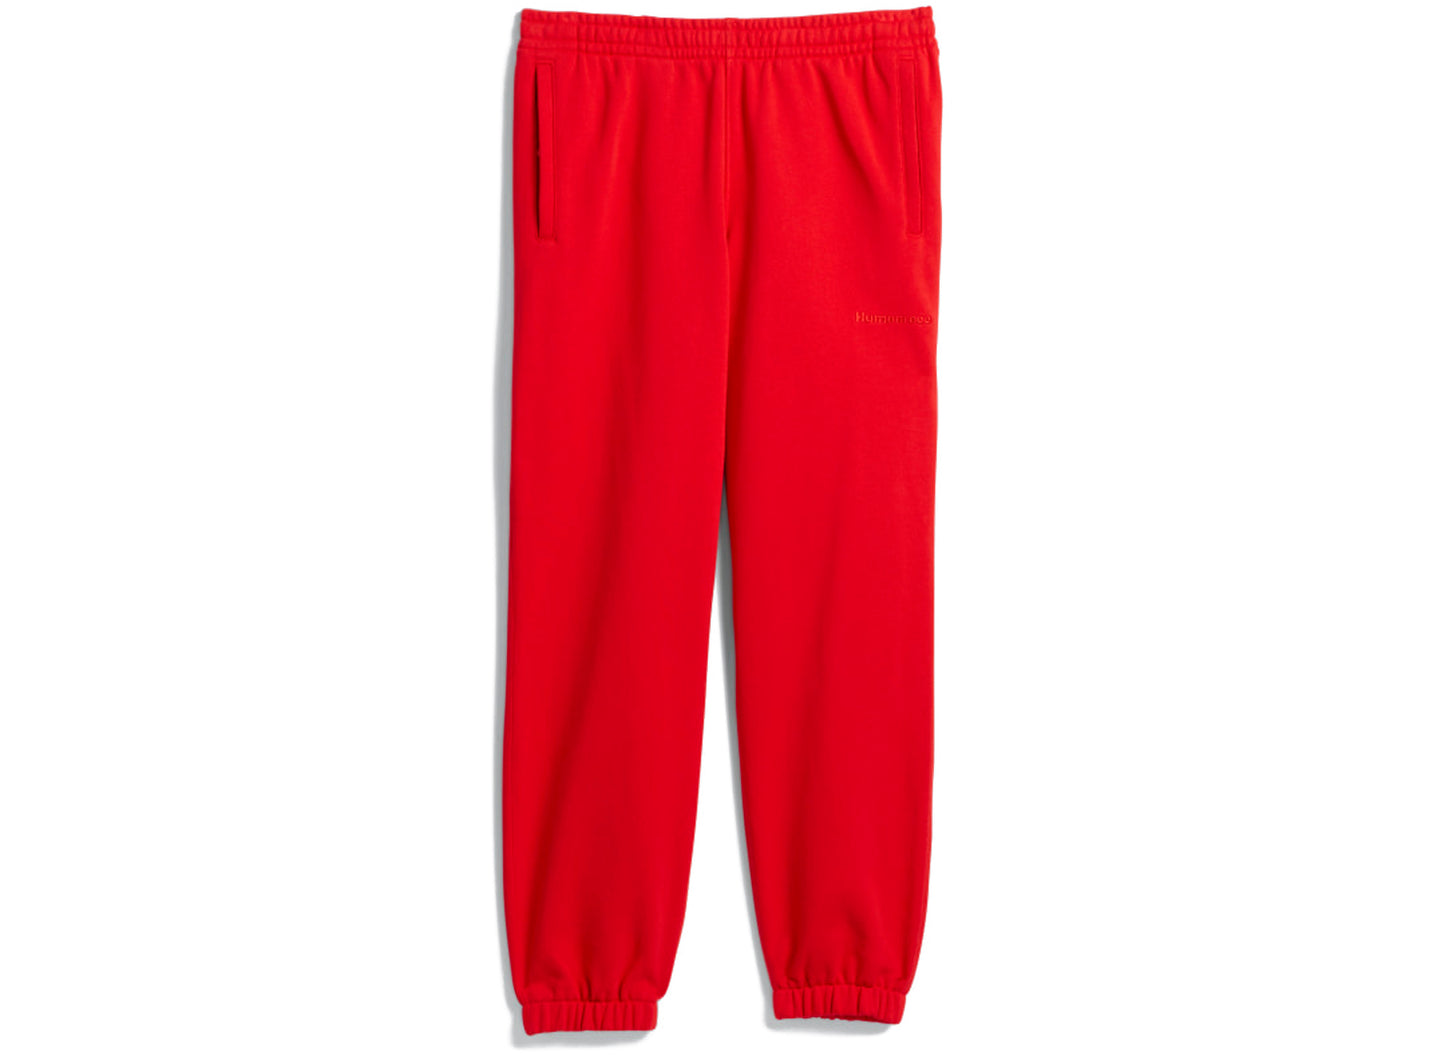 Adidas Pharrell Williams Basics Pants in Vivid Red